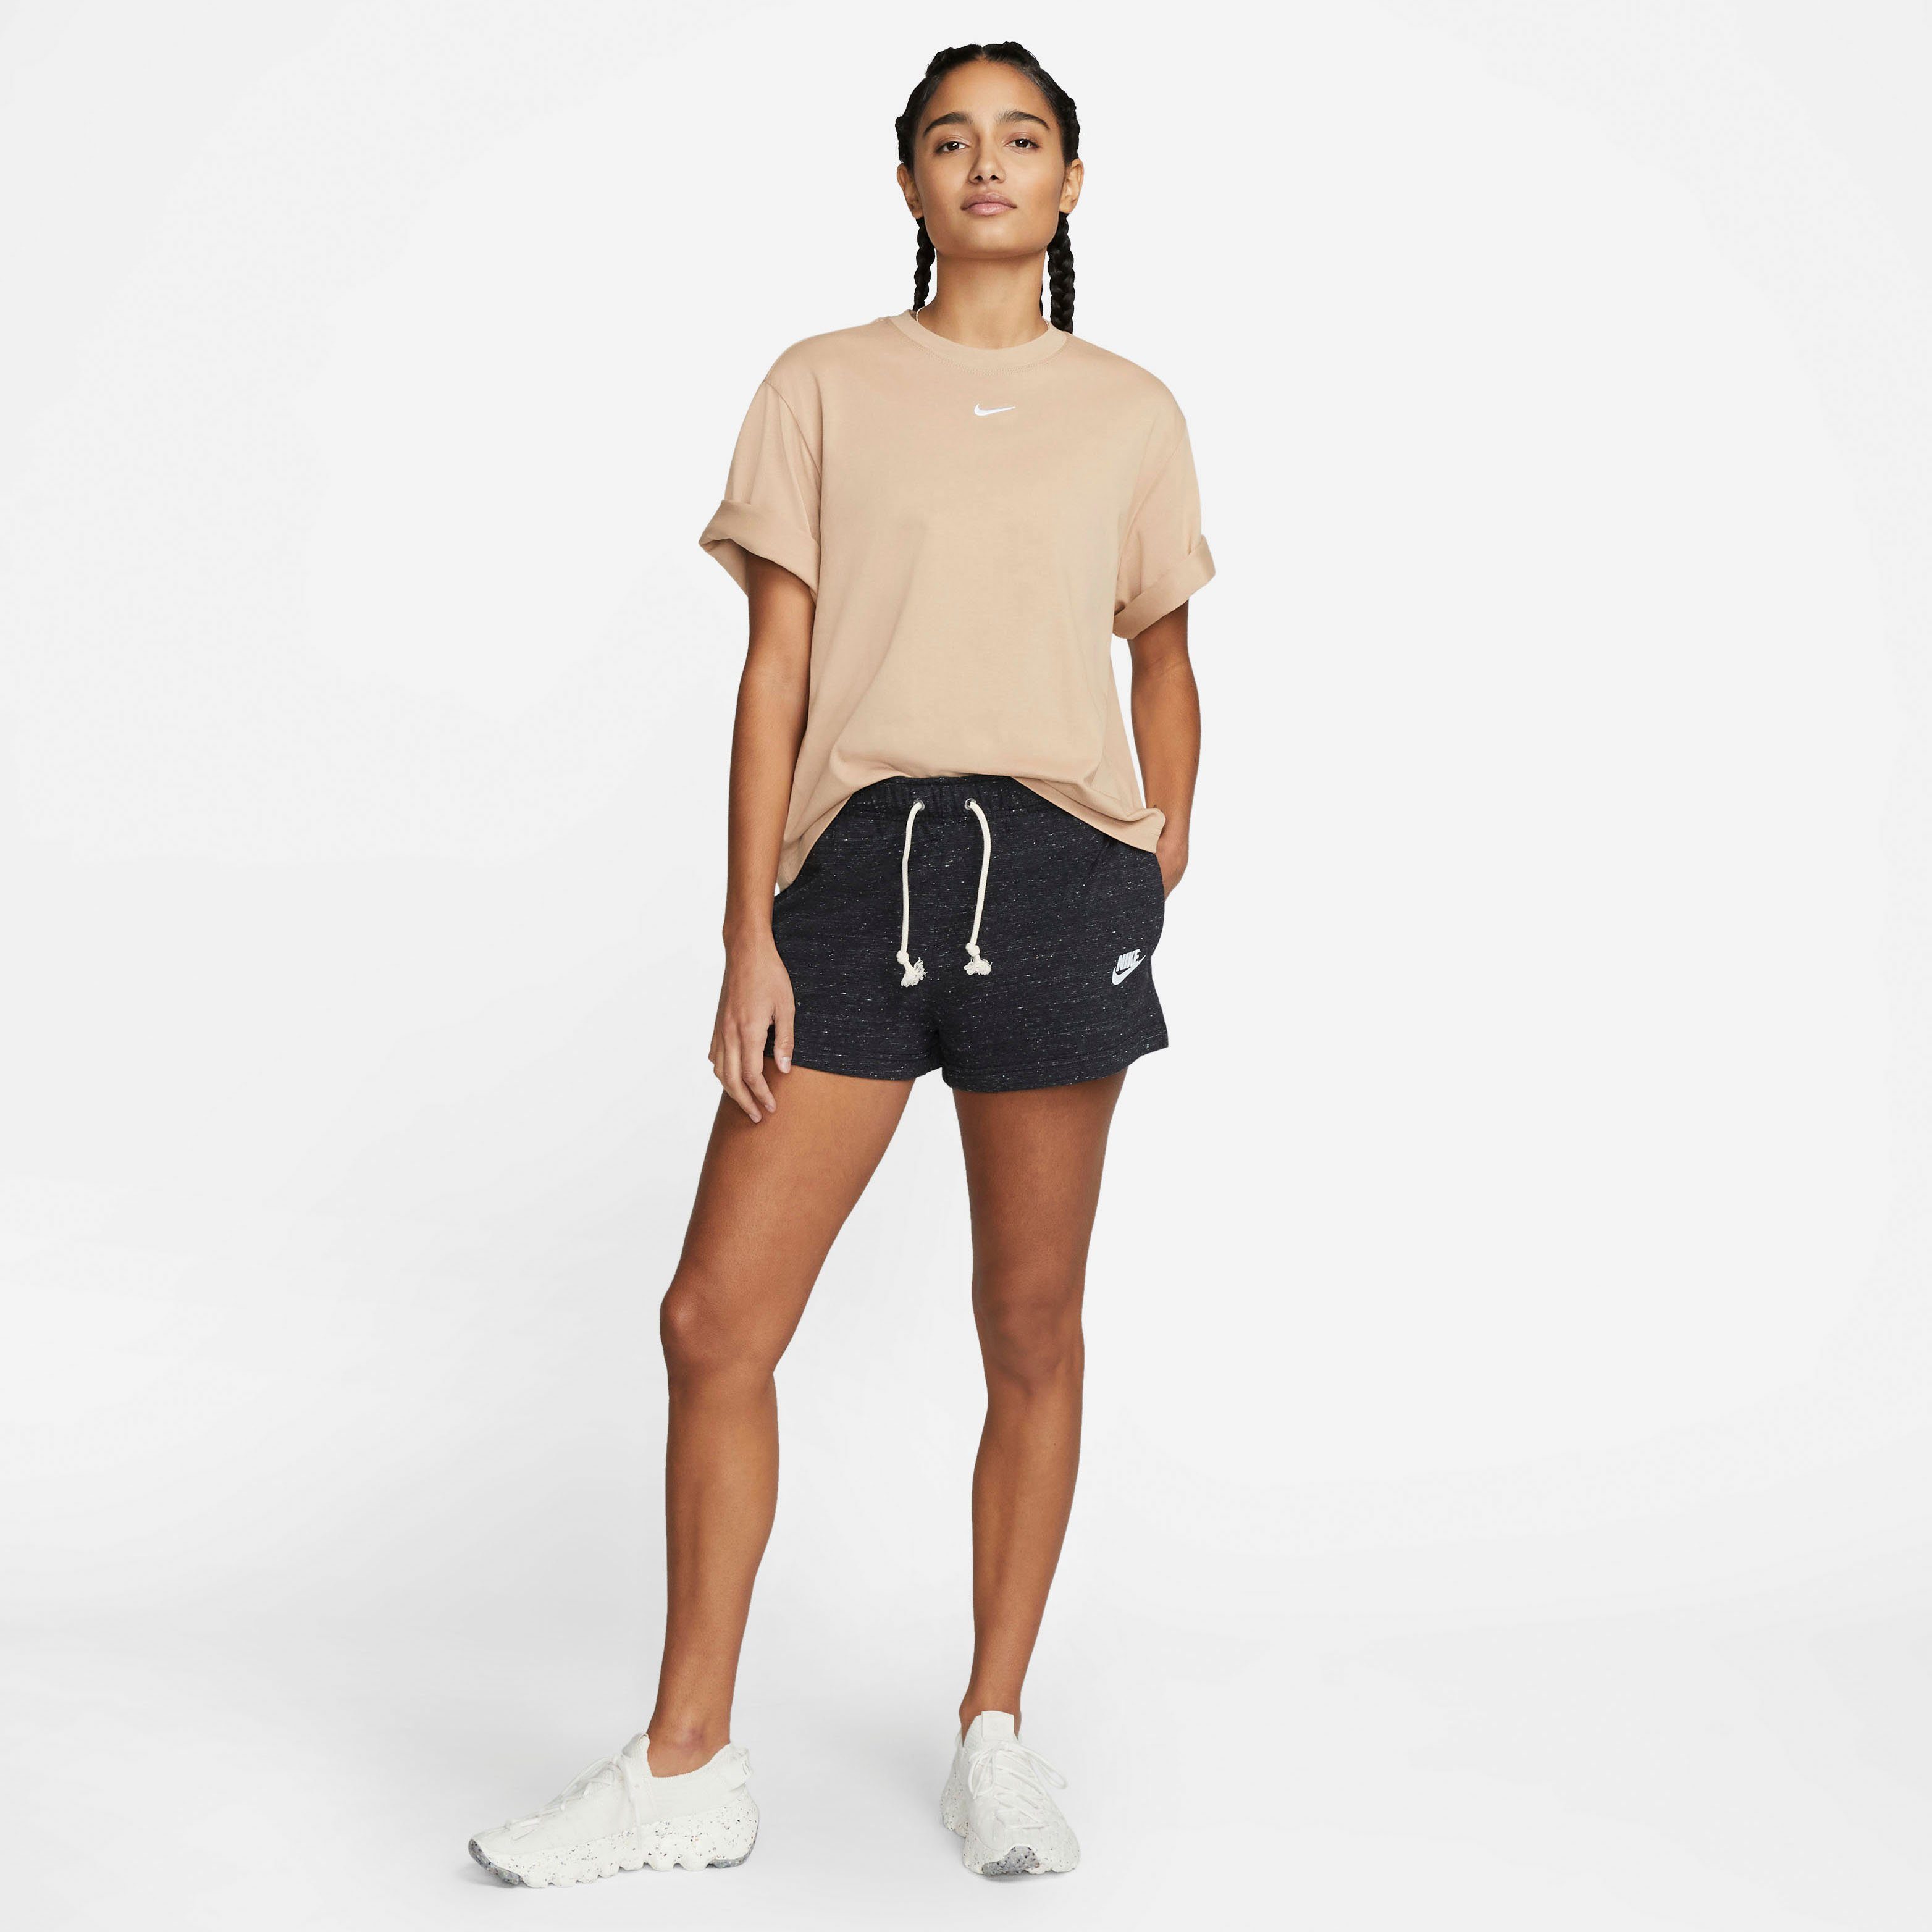 Sportswear Vintage Gym Shorts Shorts BLACK/WHITE Nike Women's